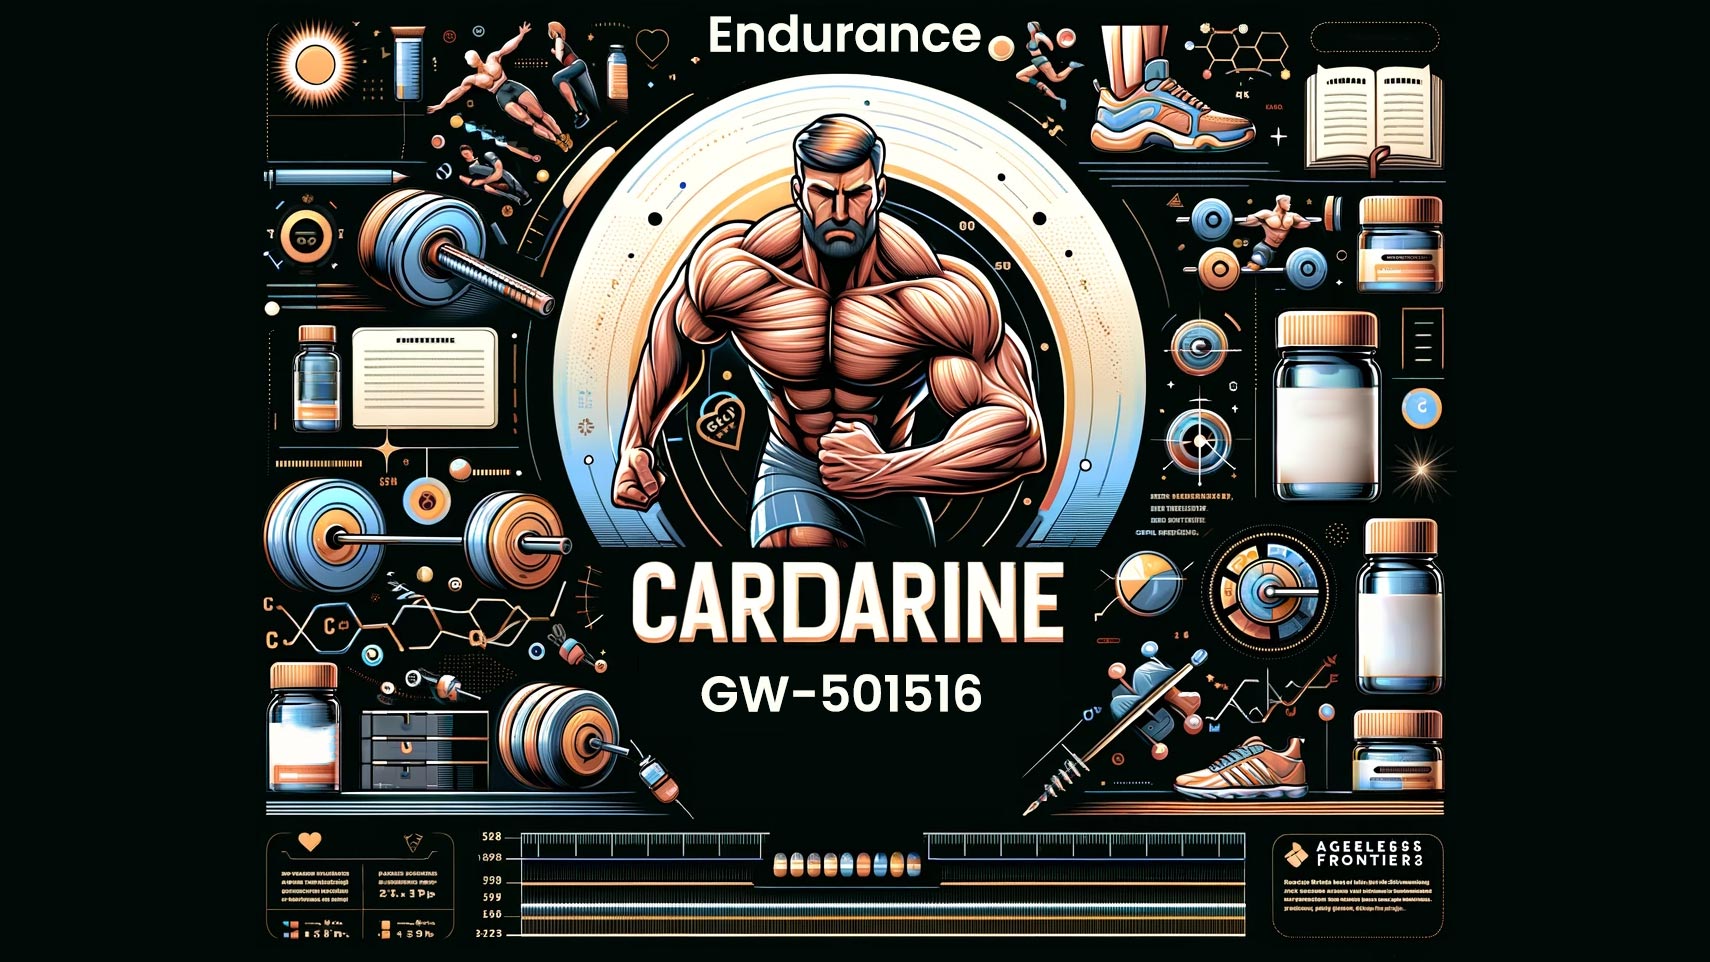 Cardarine GW 501516 Information